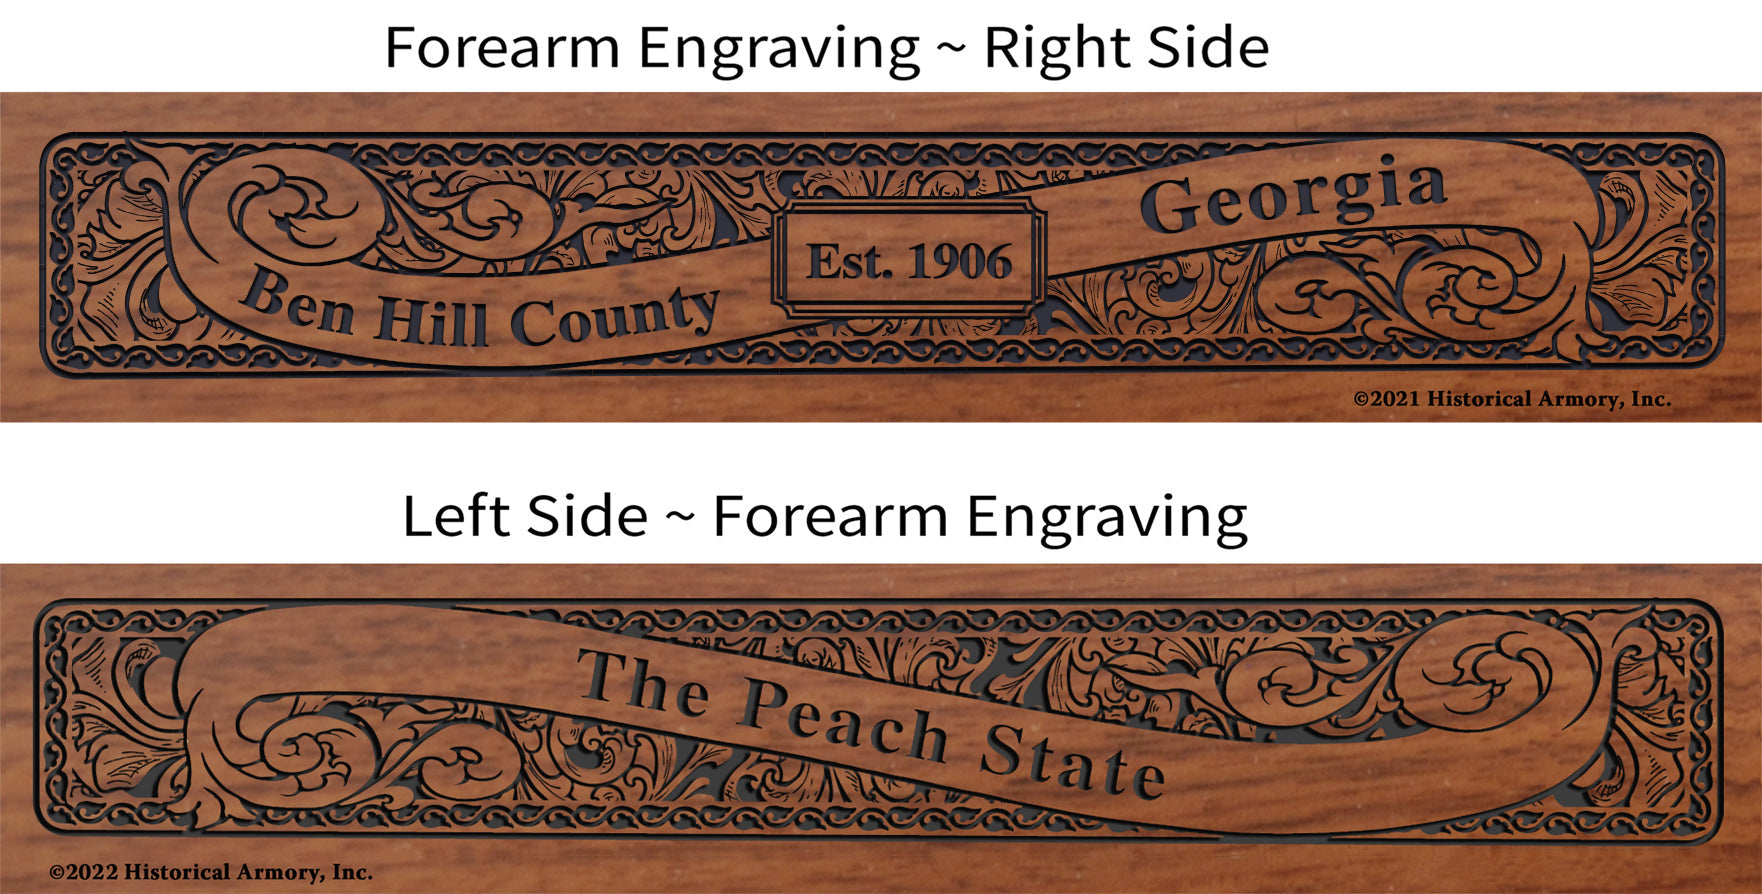 Ben Hill County Georgia Establishment and Motto History Engraved Rifle Forearm